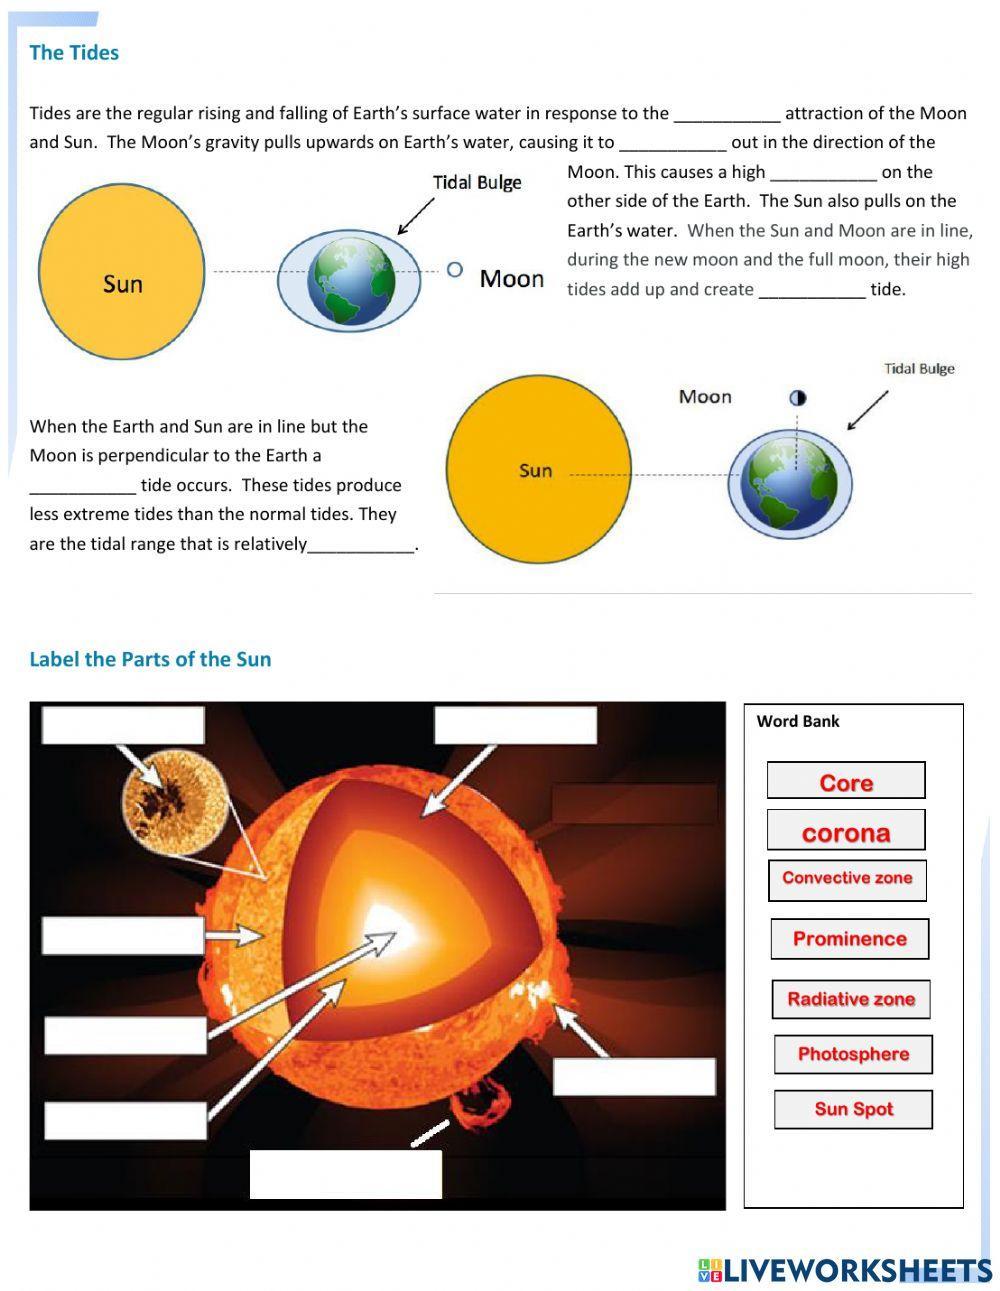 Earth, Moon, and Sun Interaction